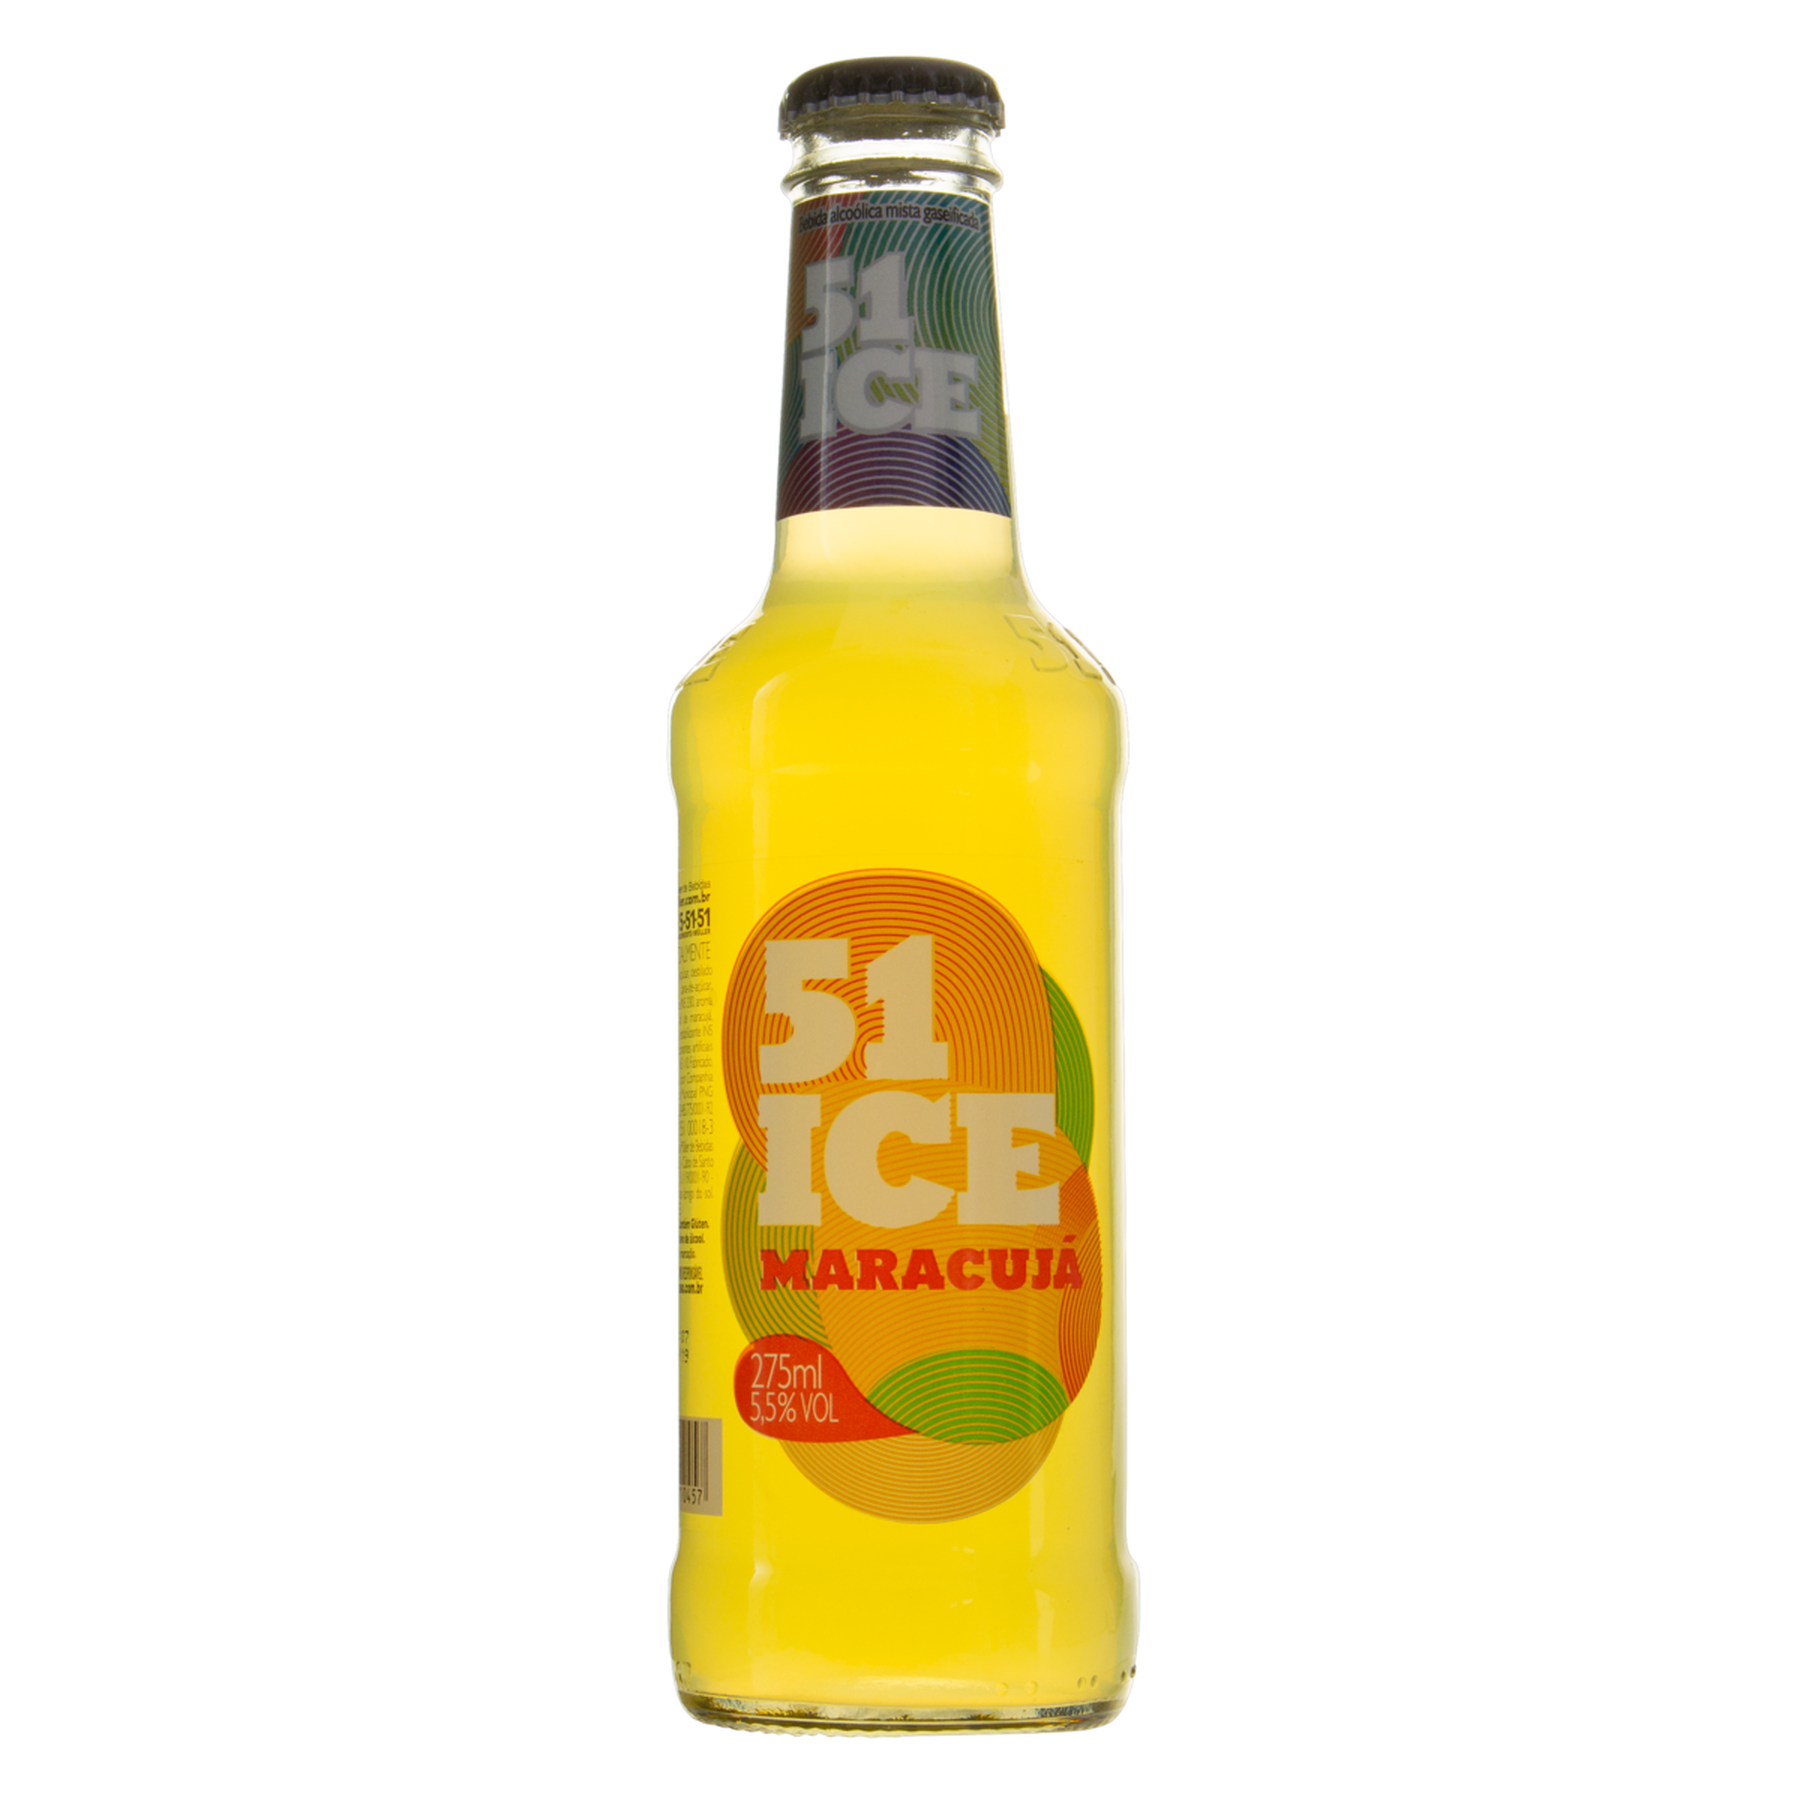 Bebida Mista Alcoólica Gaseificada Maracujá 51 Ice Garrafa 275ml